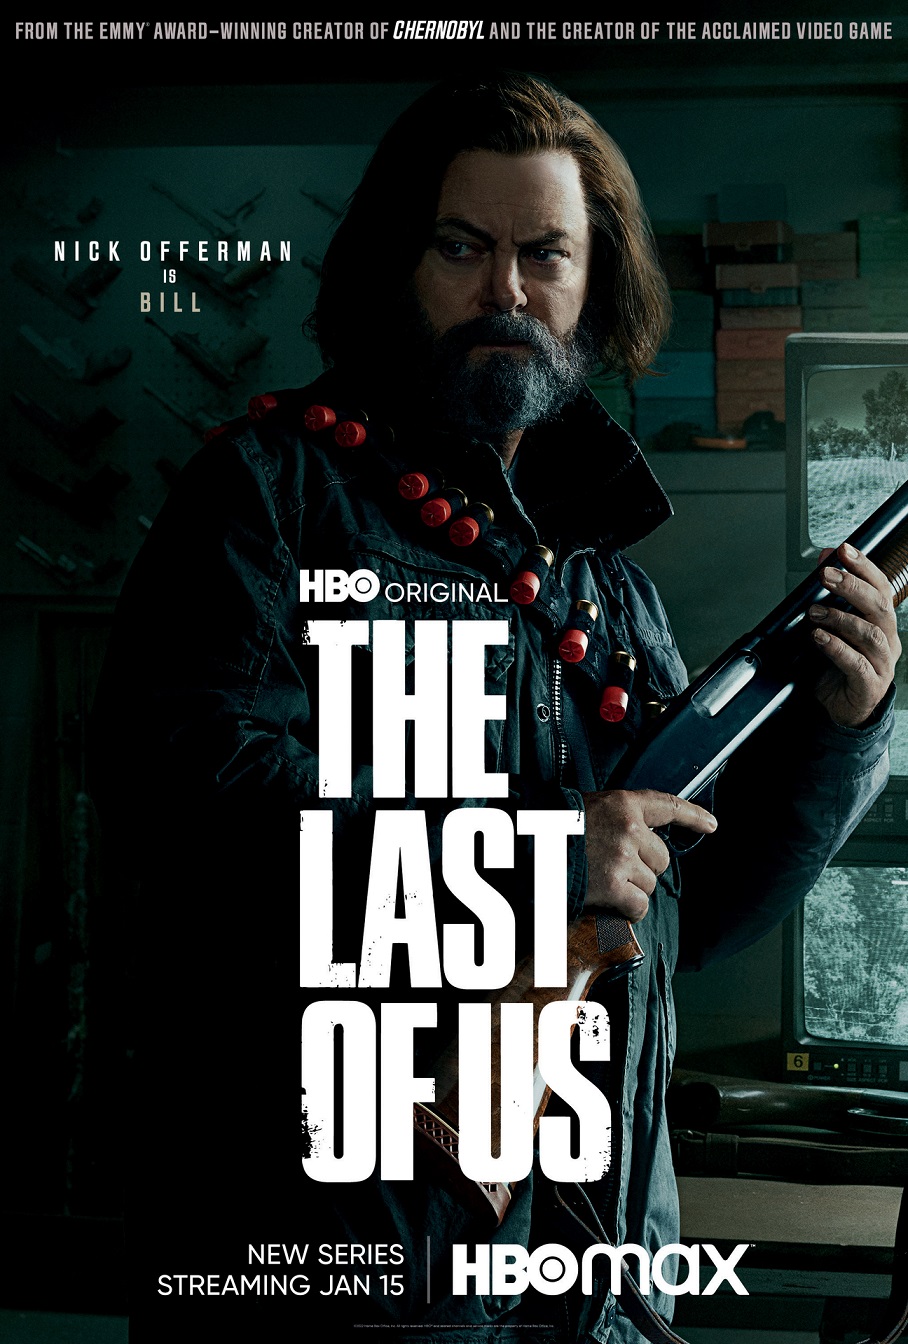 The Last of Us: Episode 3 Promo Trailer